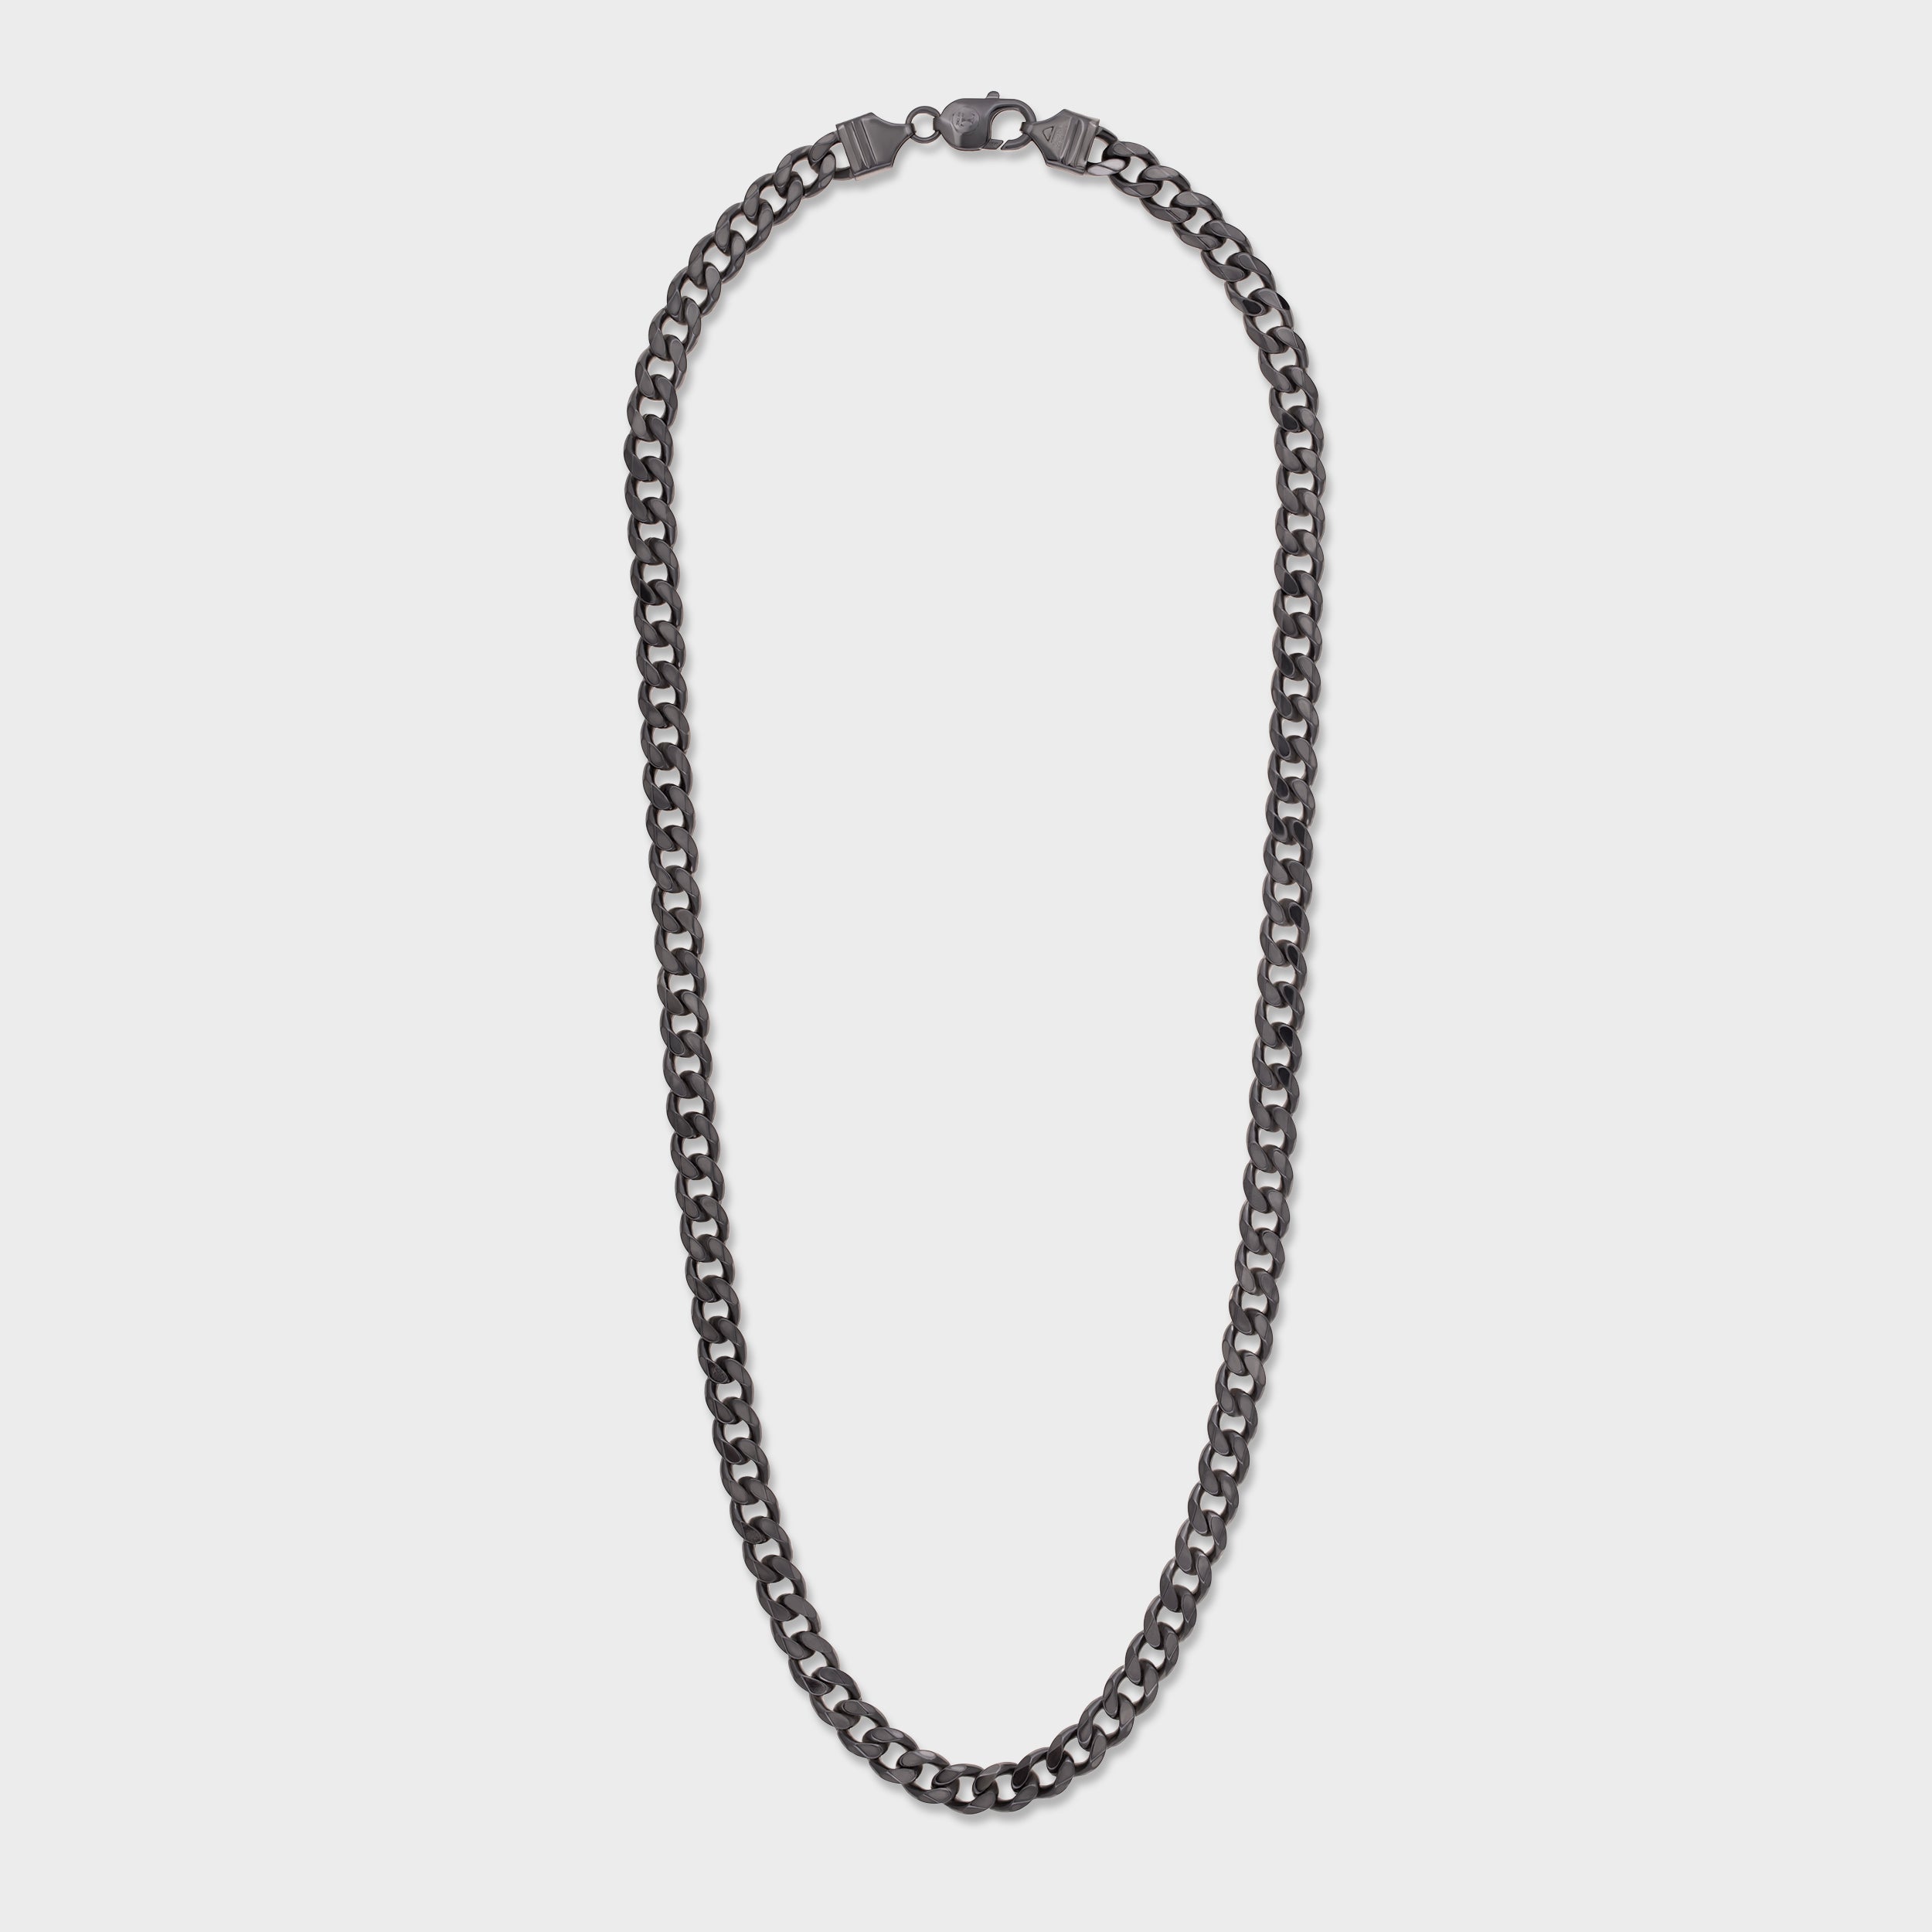 Elegant Black Rhodium Silver Chain | SKU : 0020420925, 0020420901, 0020420871